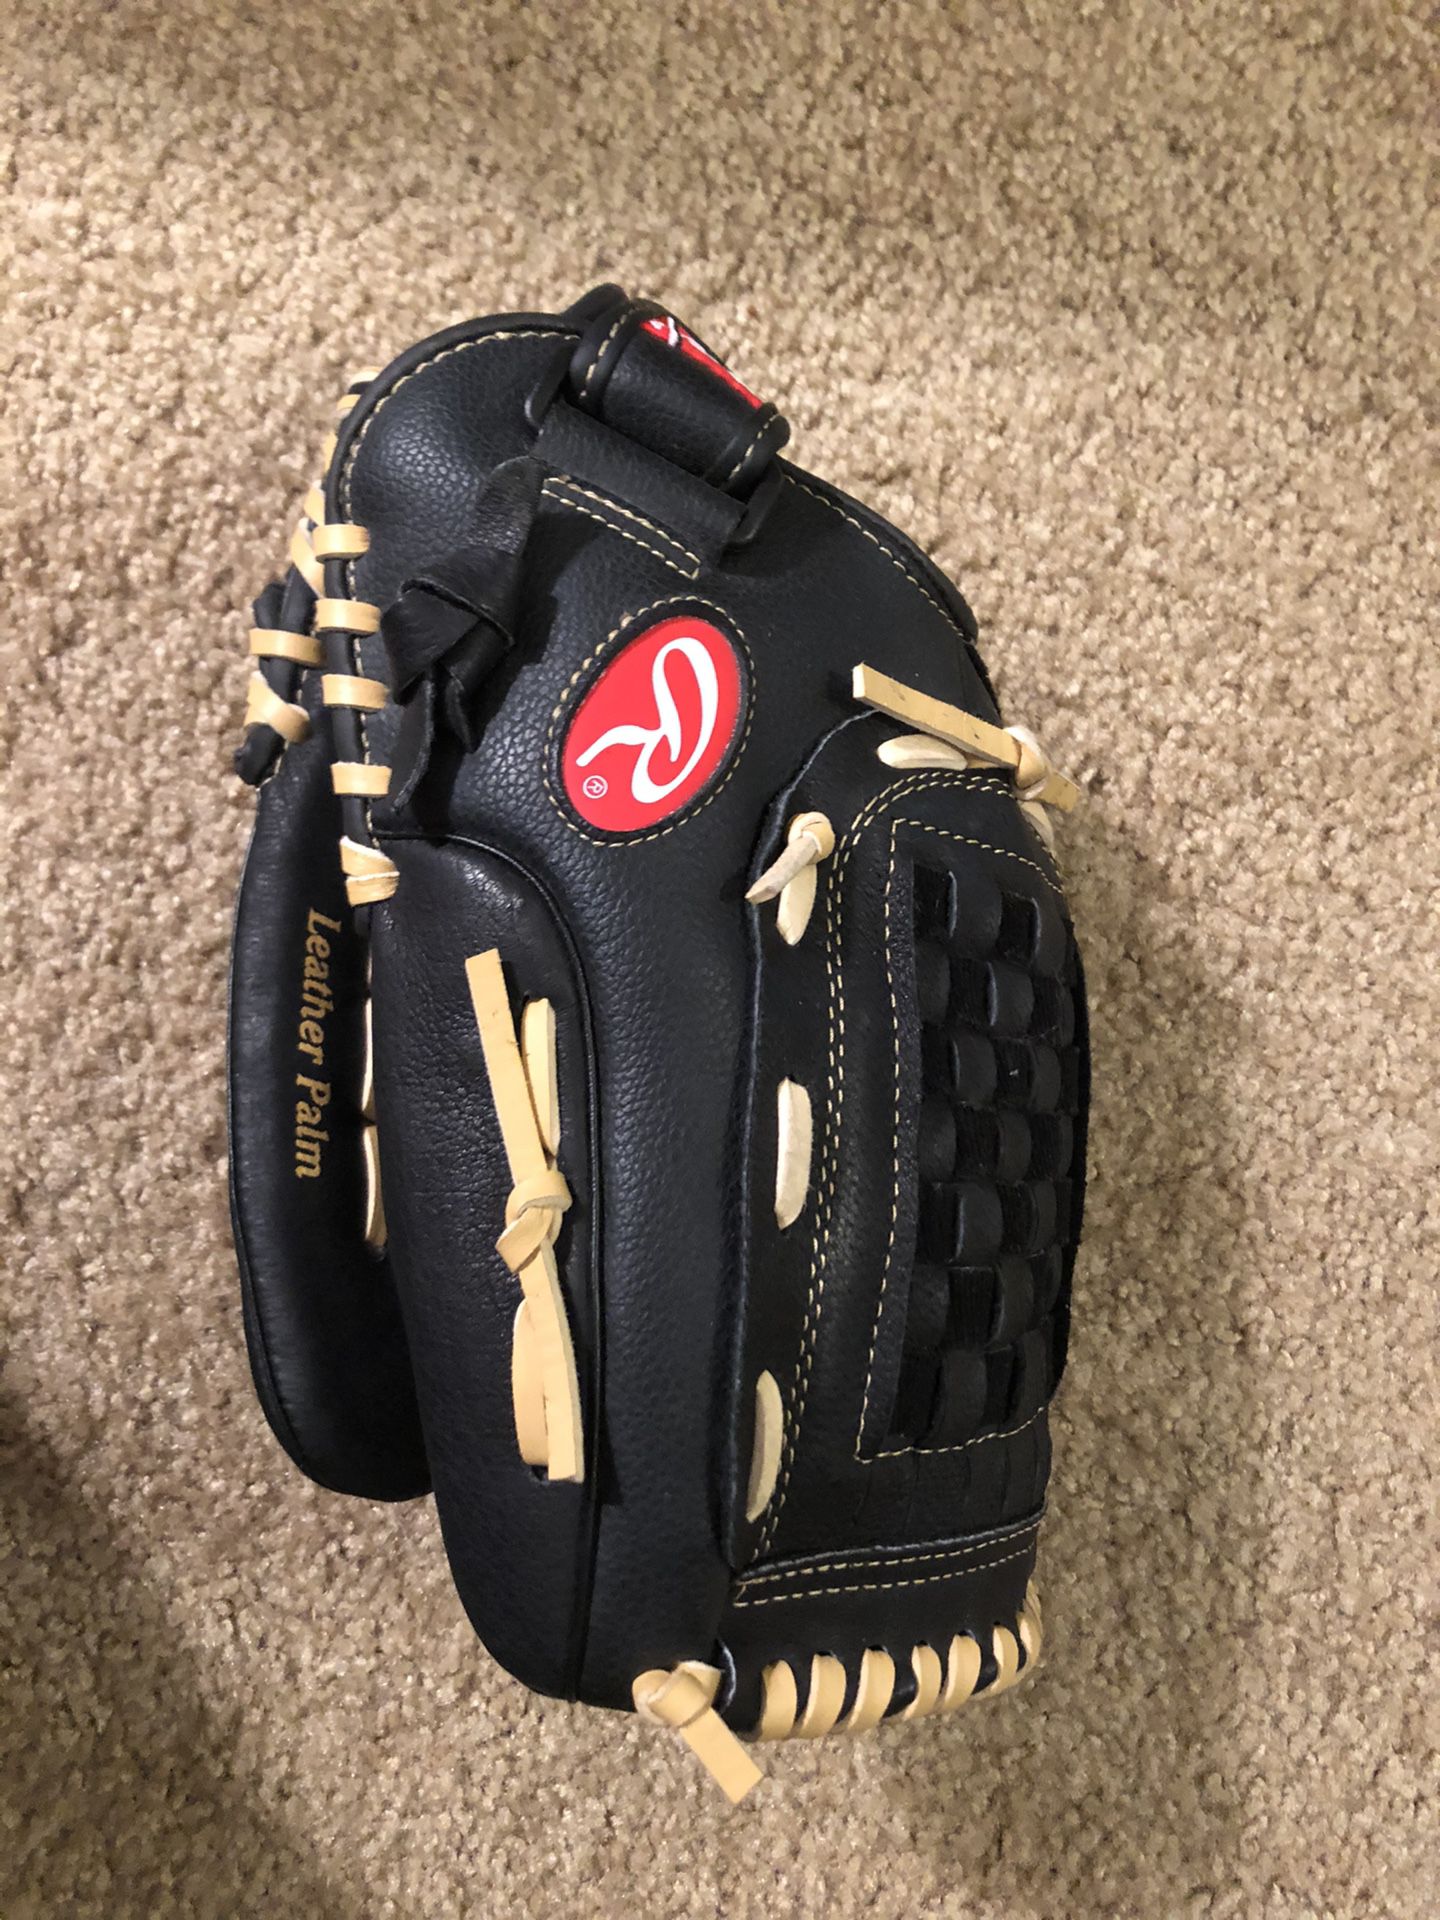 Rawlings 13” softball glove